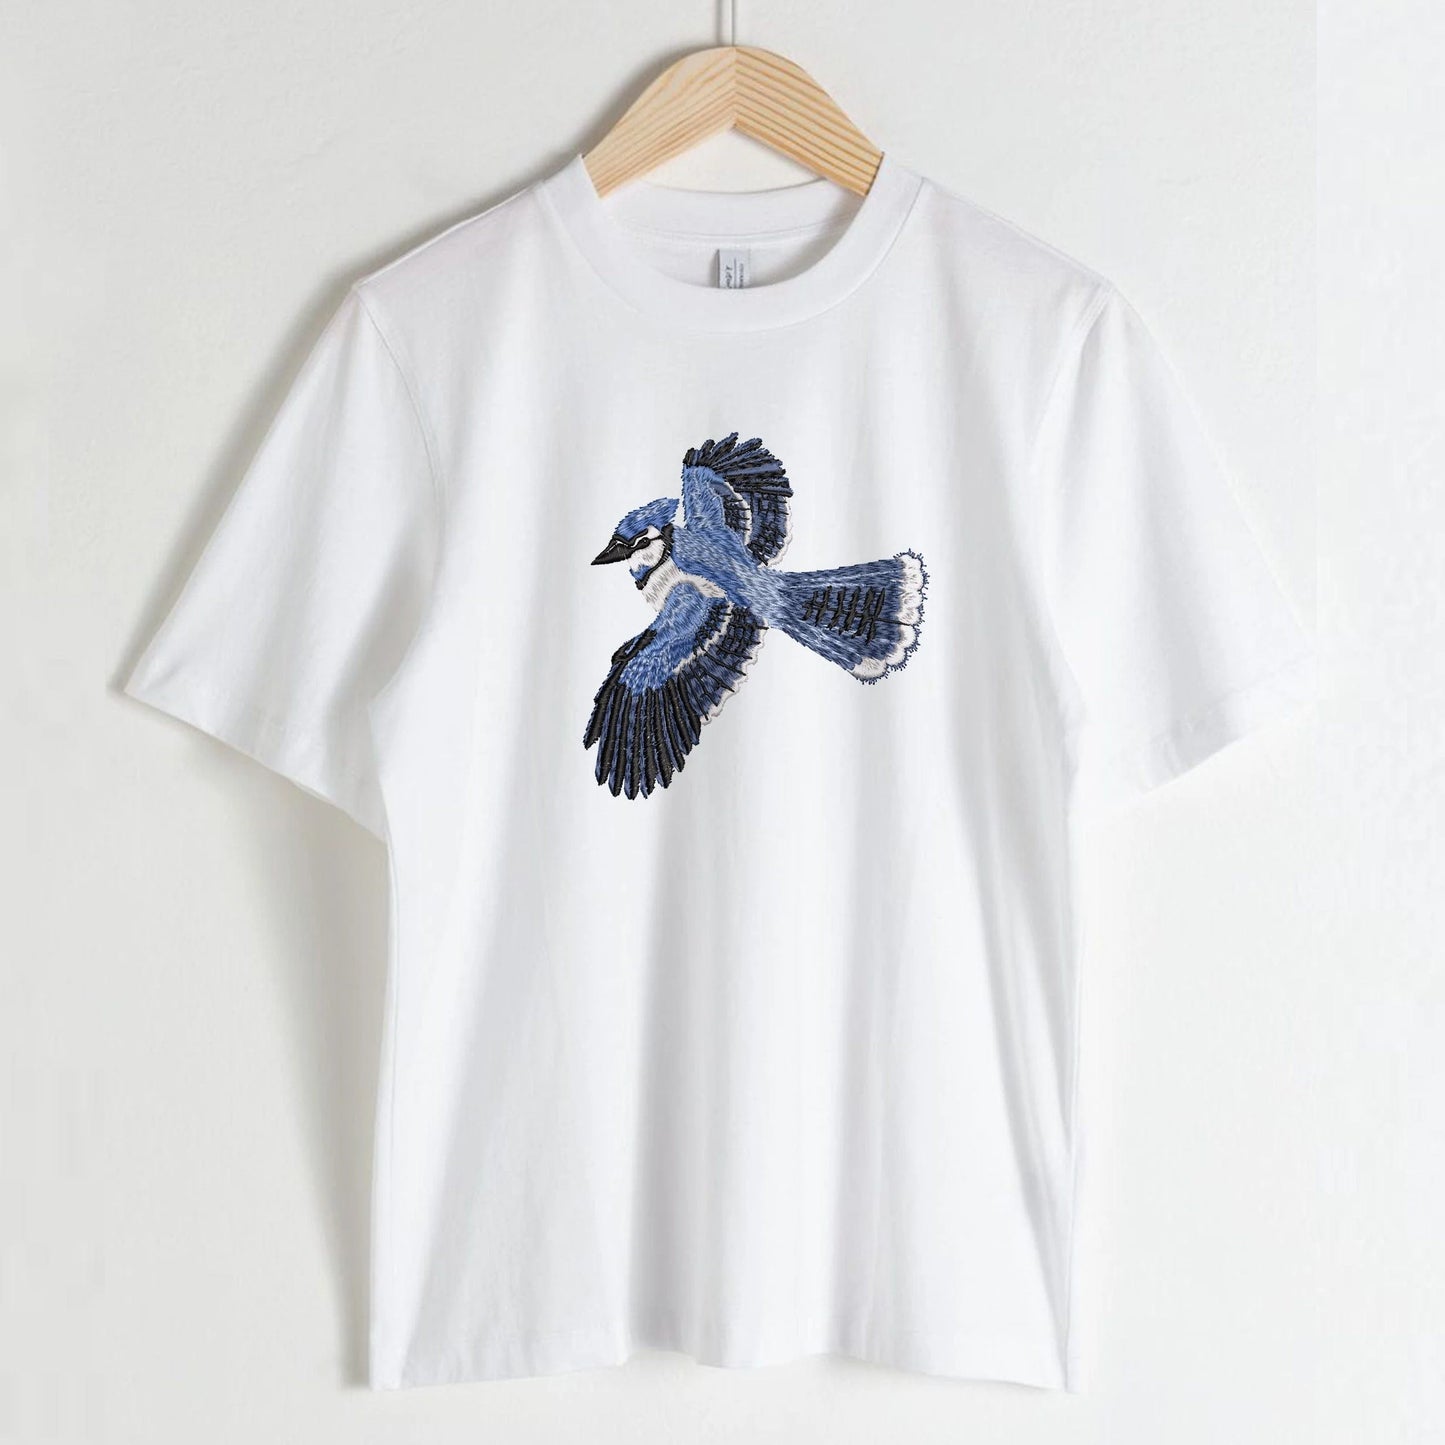 Beautiful Bluebird machine embroidery design on t-shirt